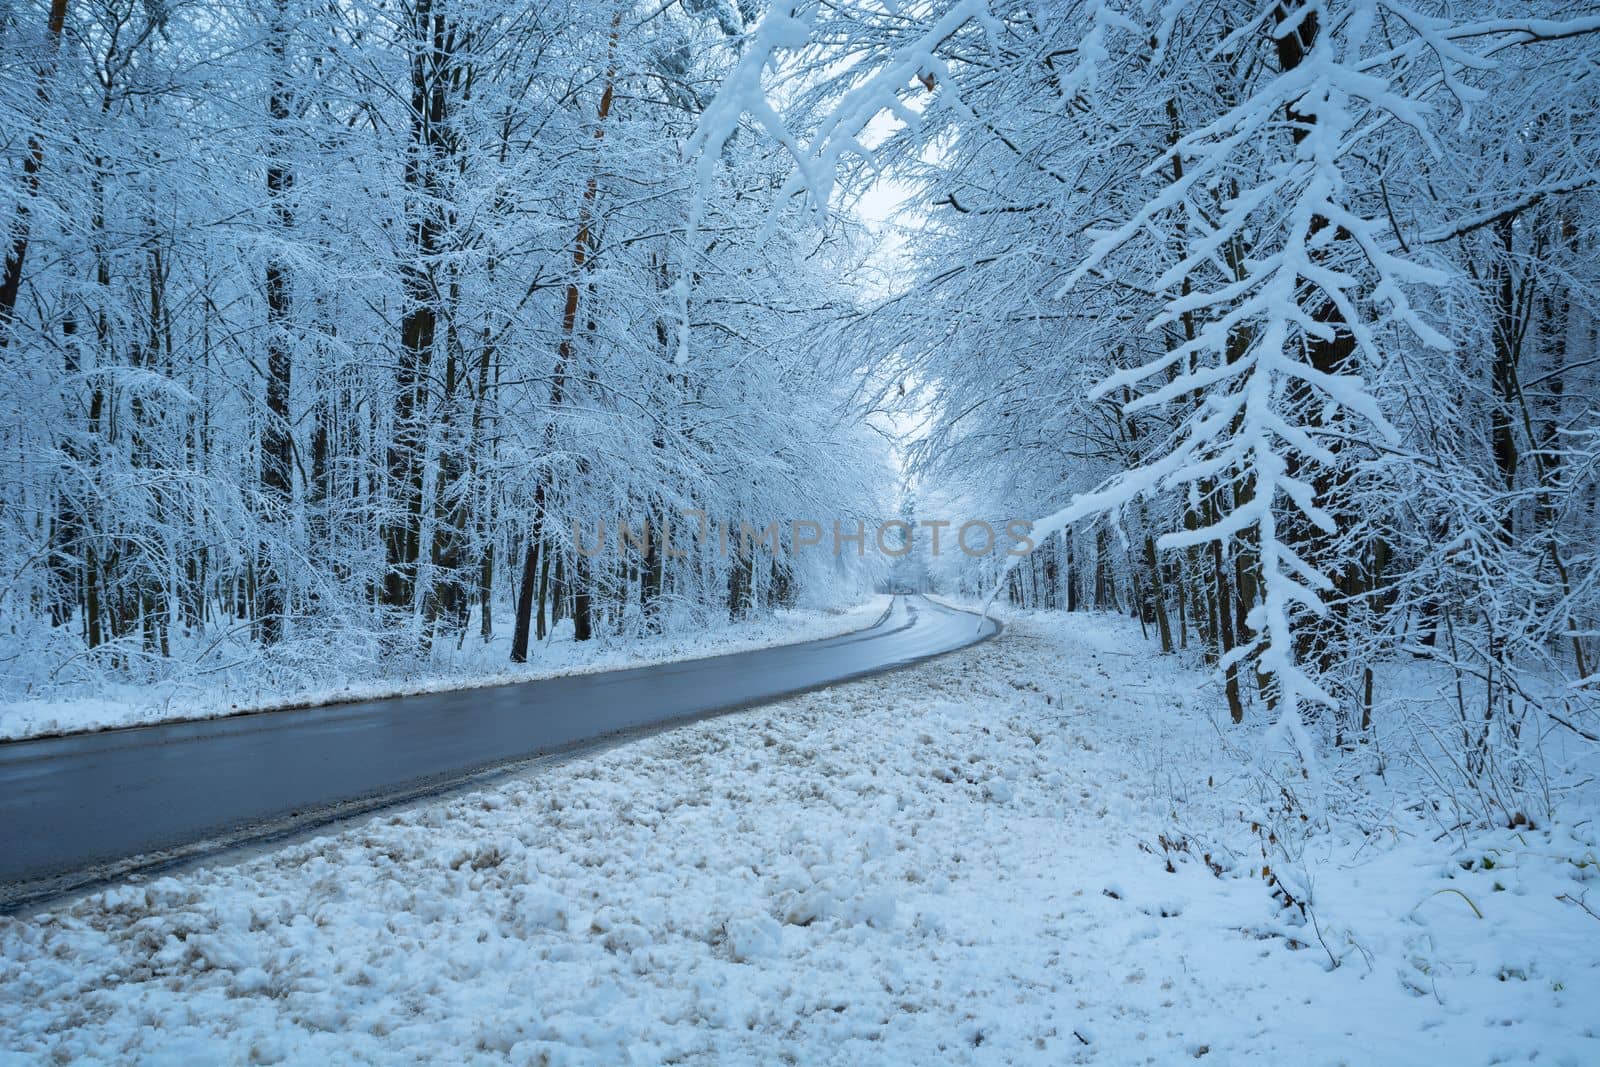 Asphalt road through the forest in winter scenery by darekb22